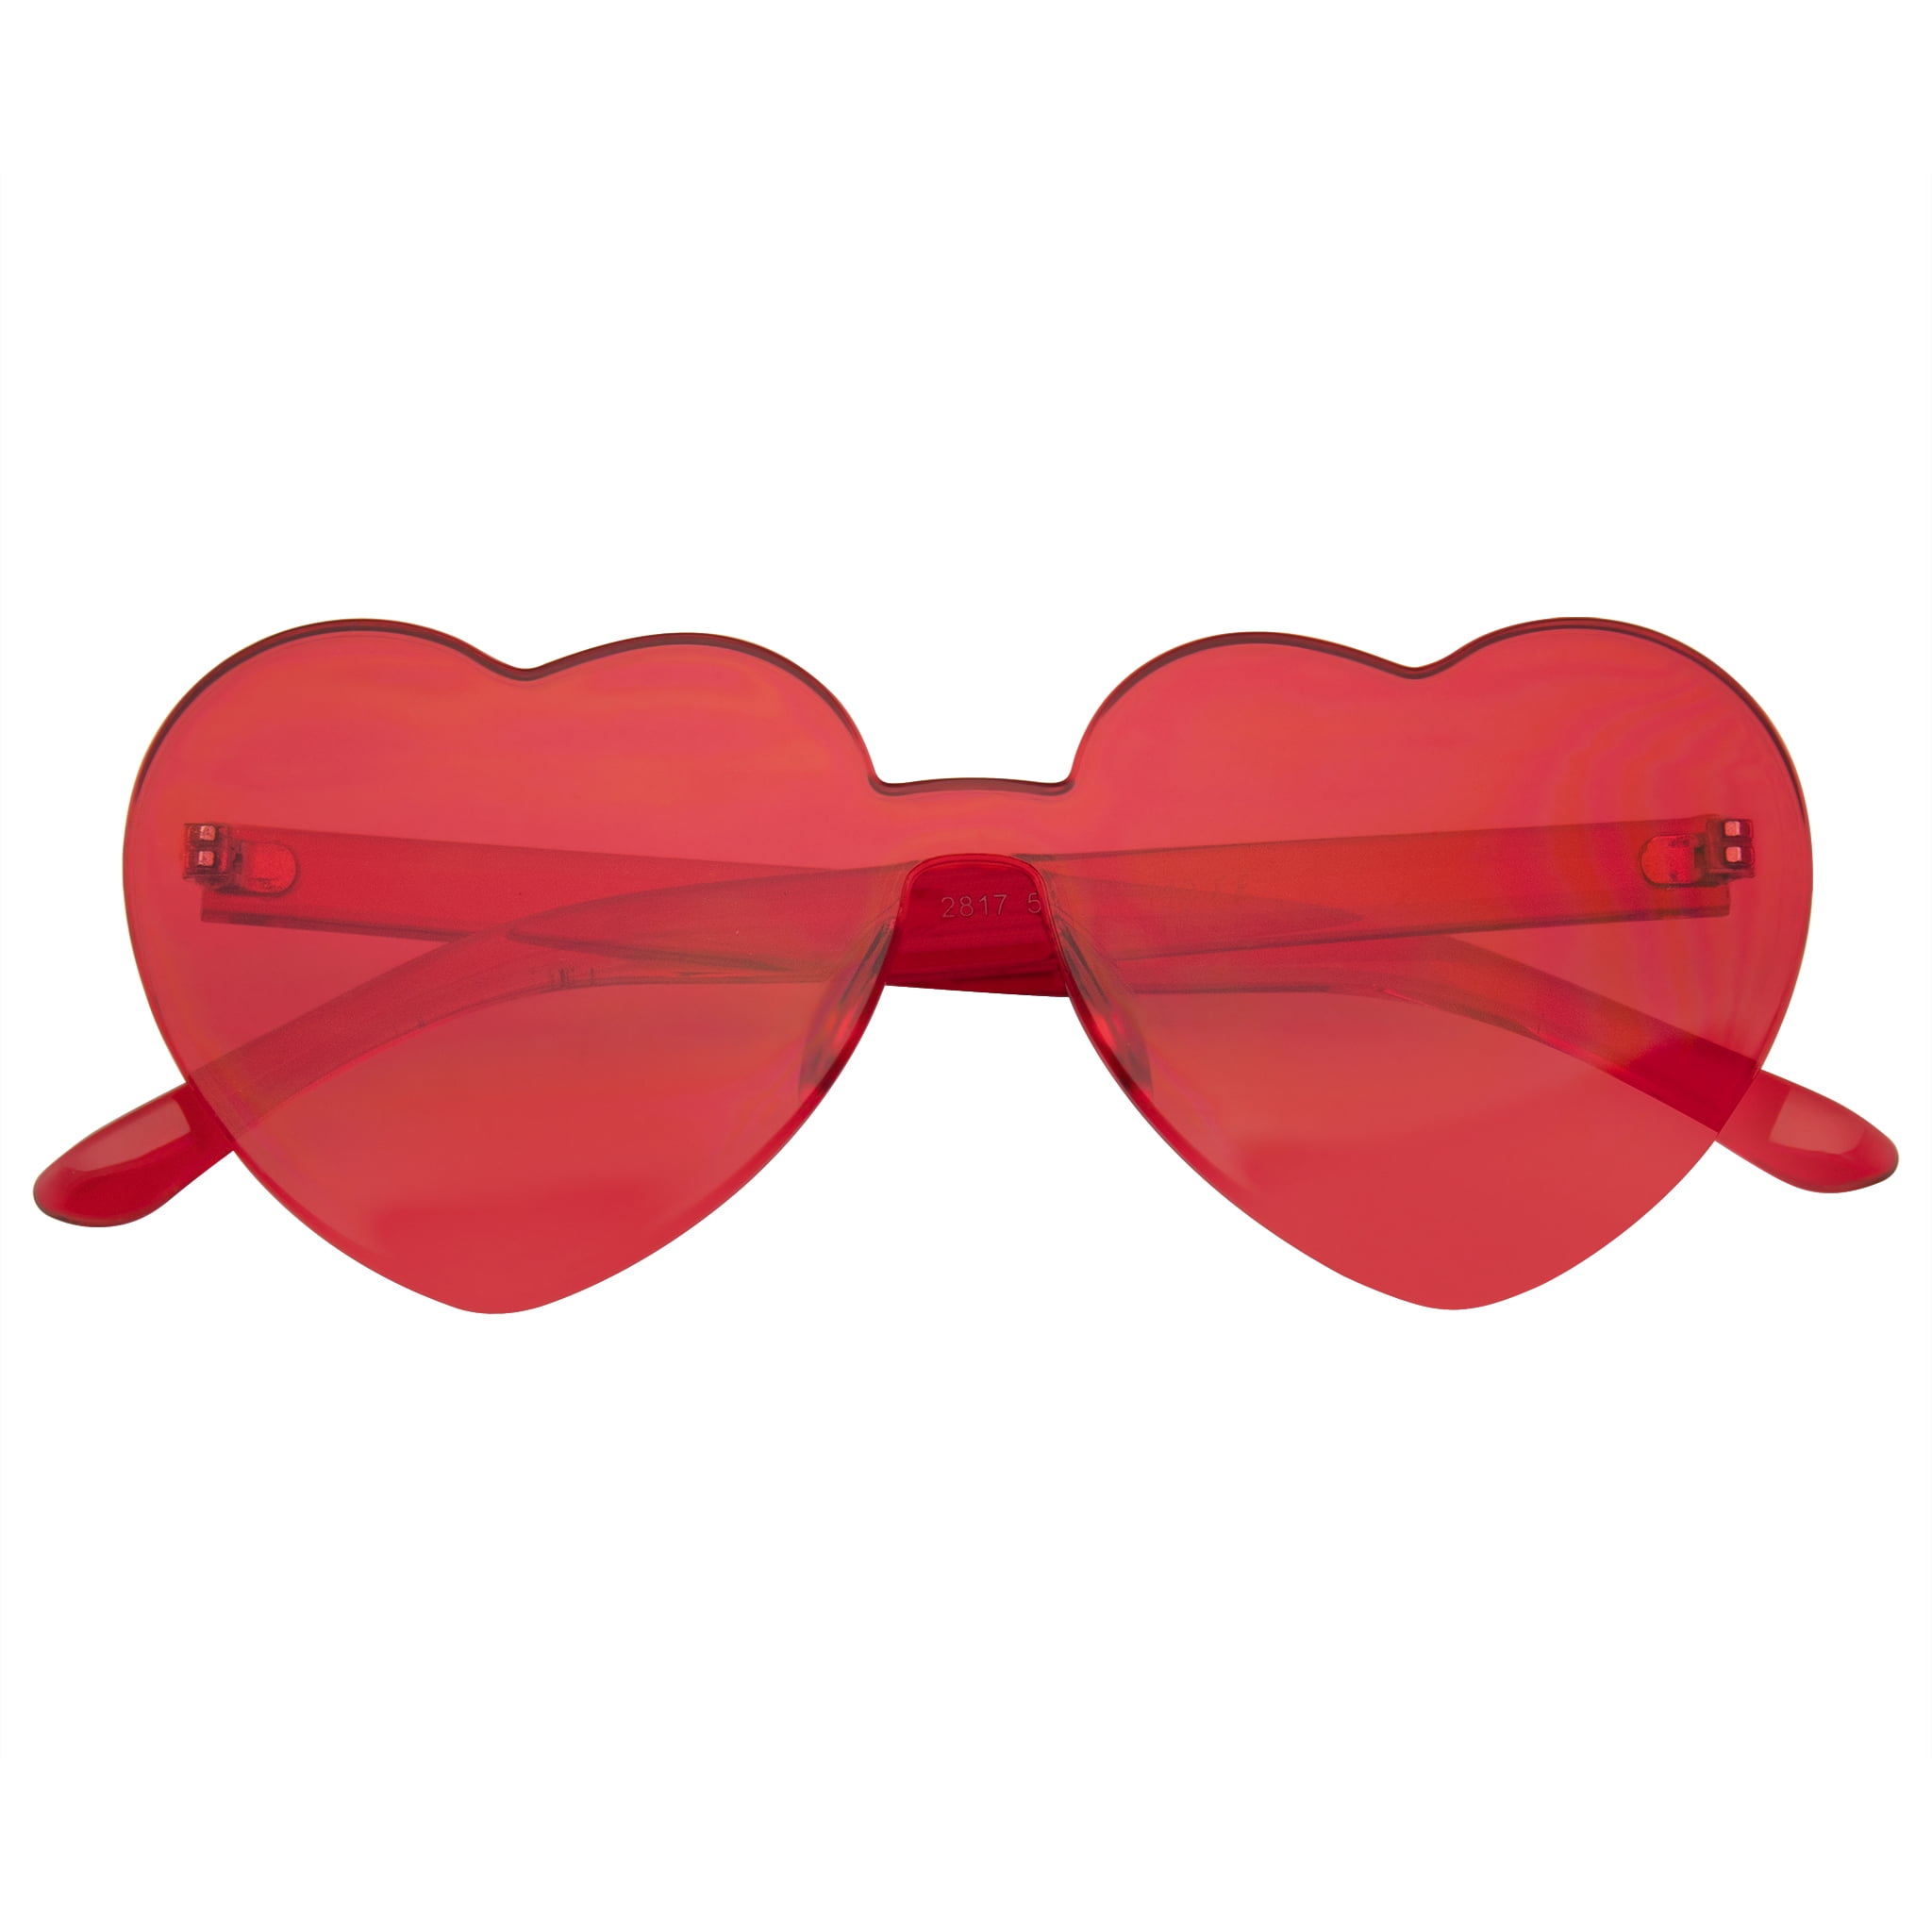 Red heart sunglasses